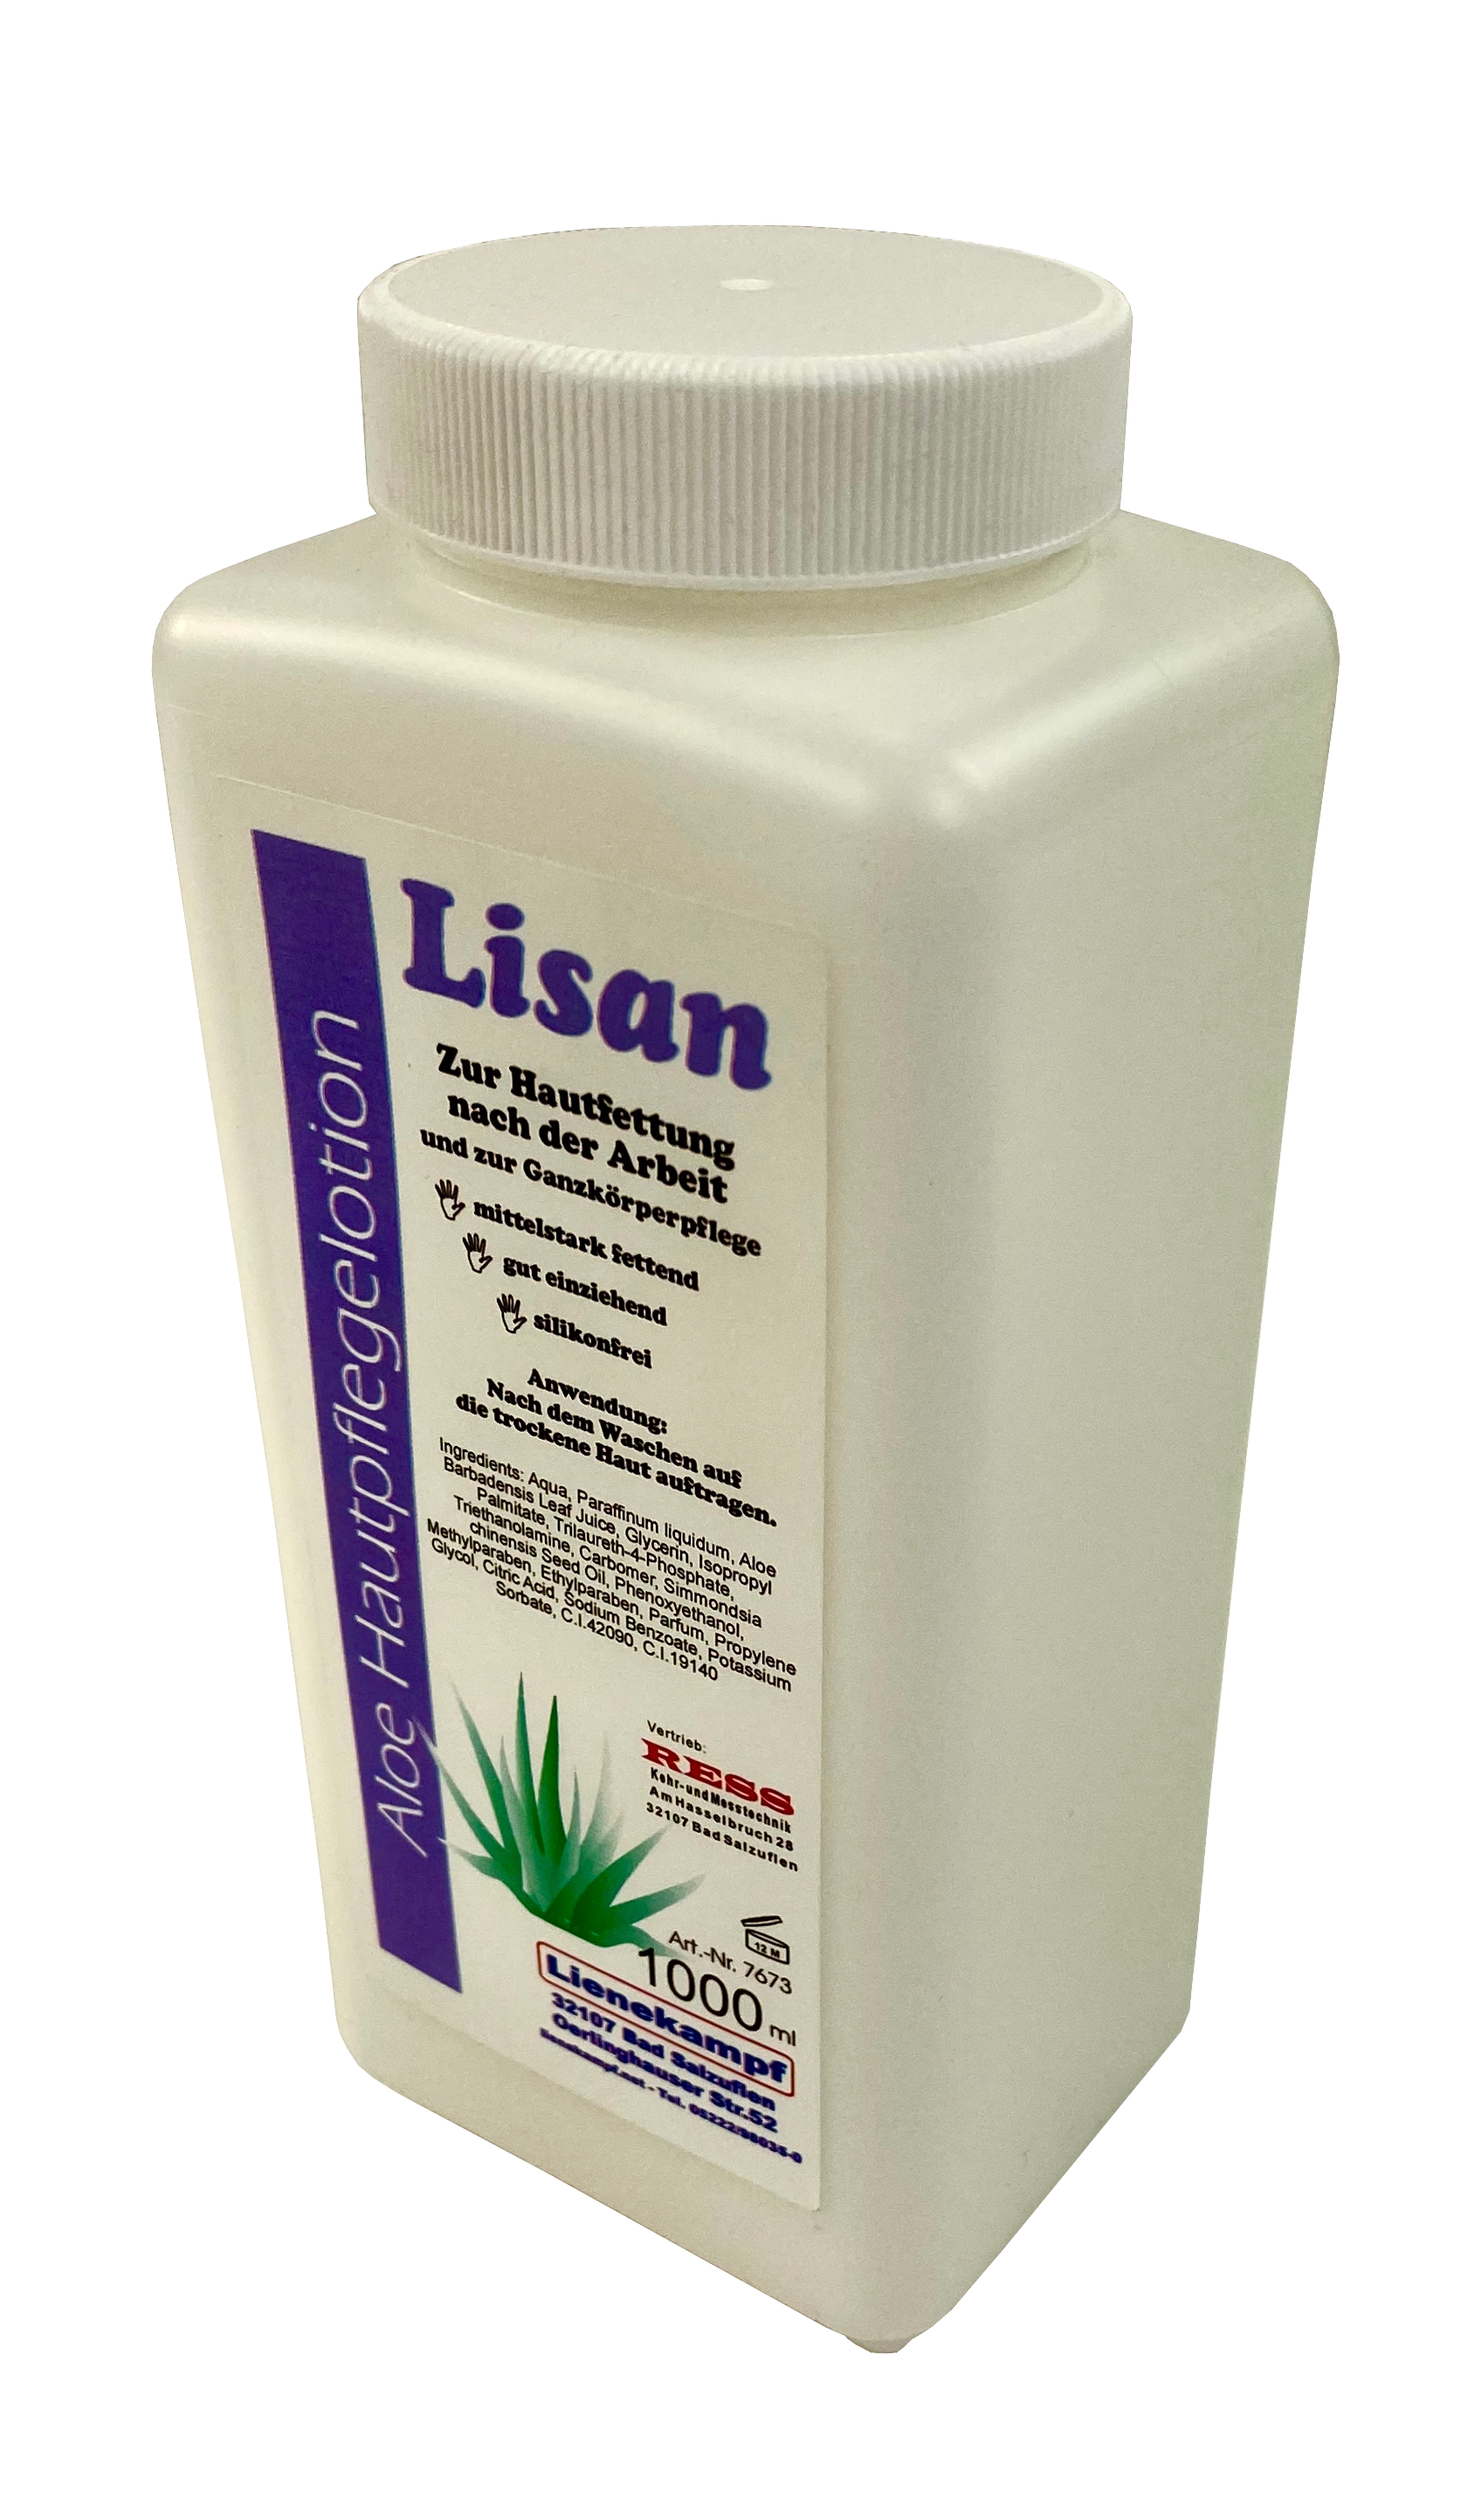 Lisan - Aloe Hautpflegelotion 1 Liter-Spenderflasche